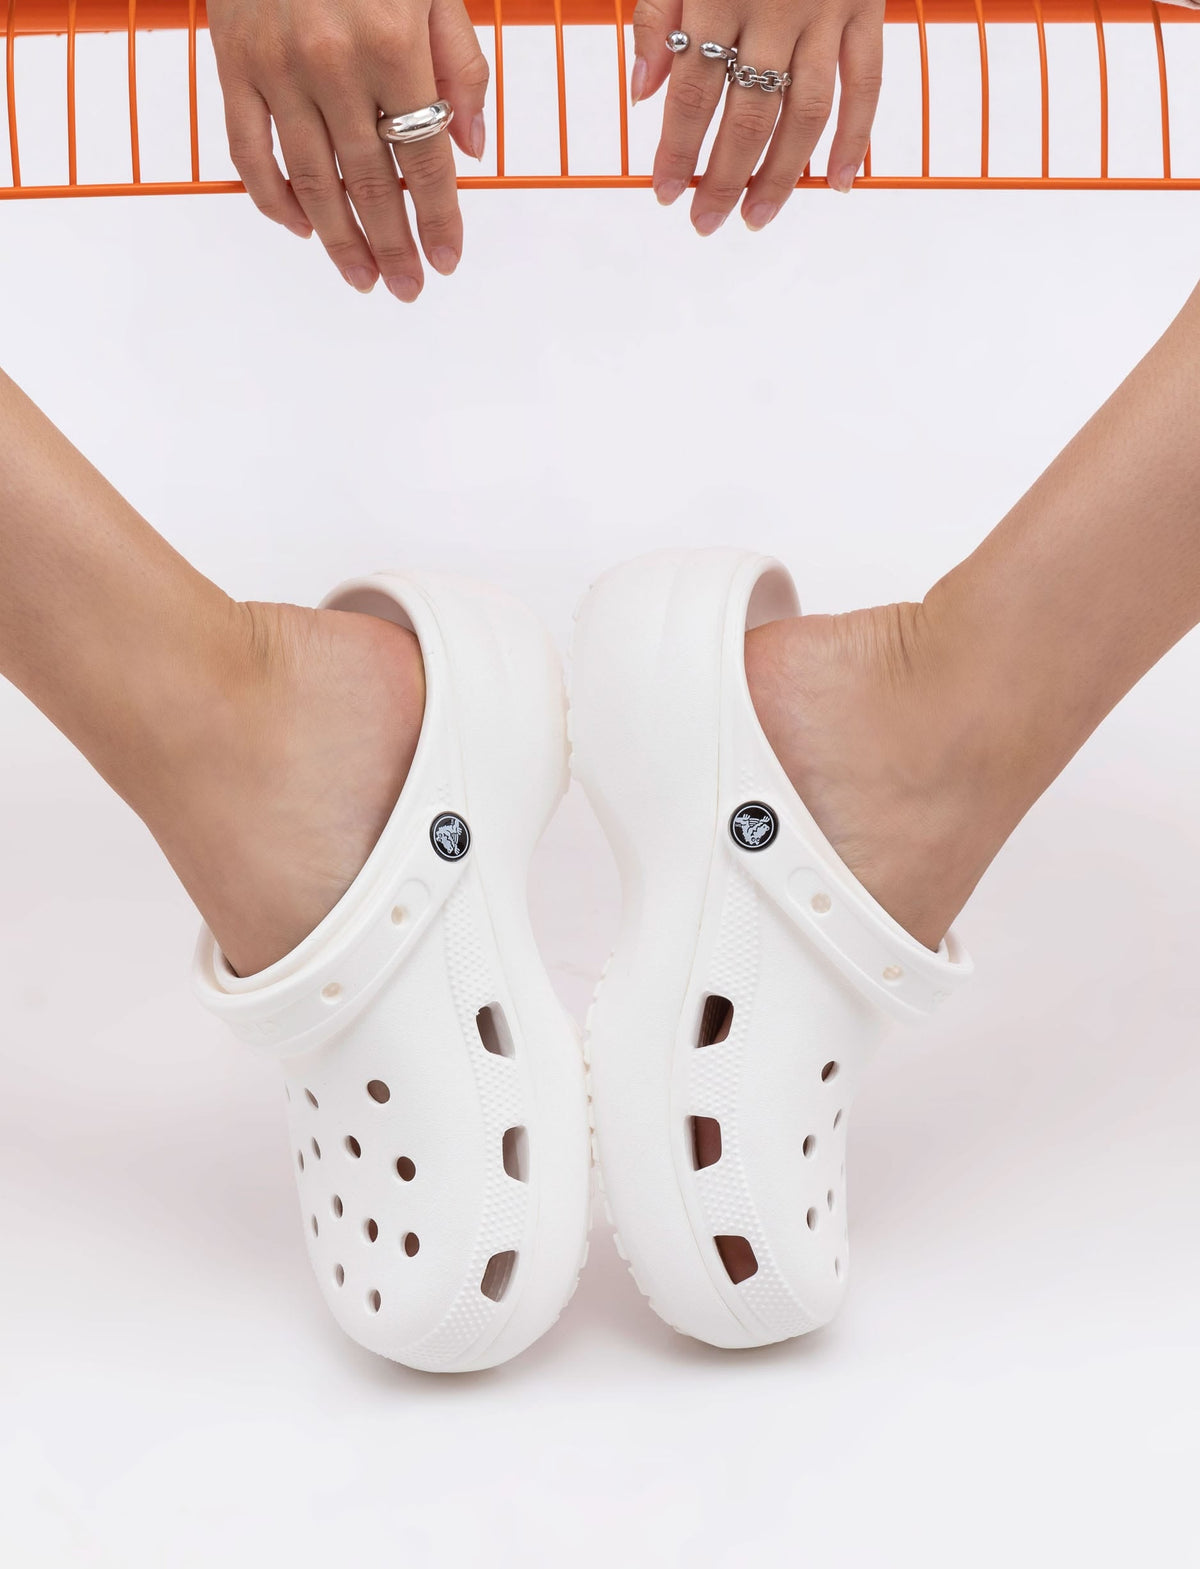 Crocs Classic - נעלי קרוקס קלאסיים בצבע לבן יוניסקס-Crocs-36-37-נאקו